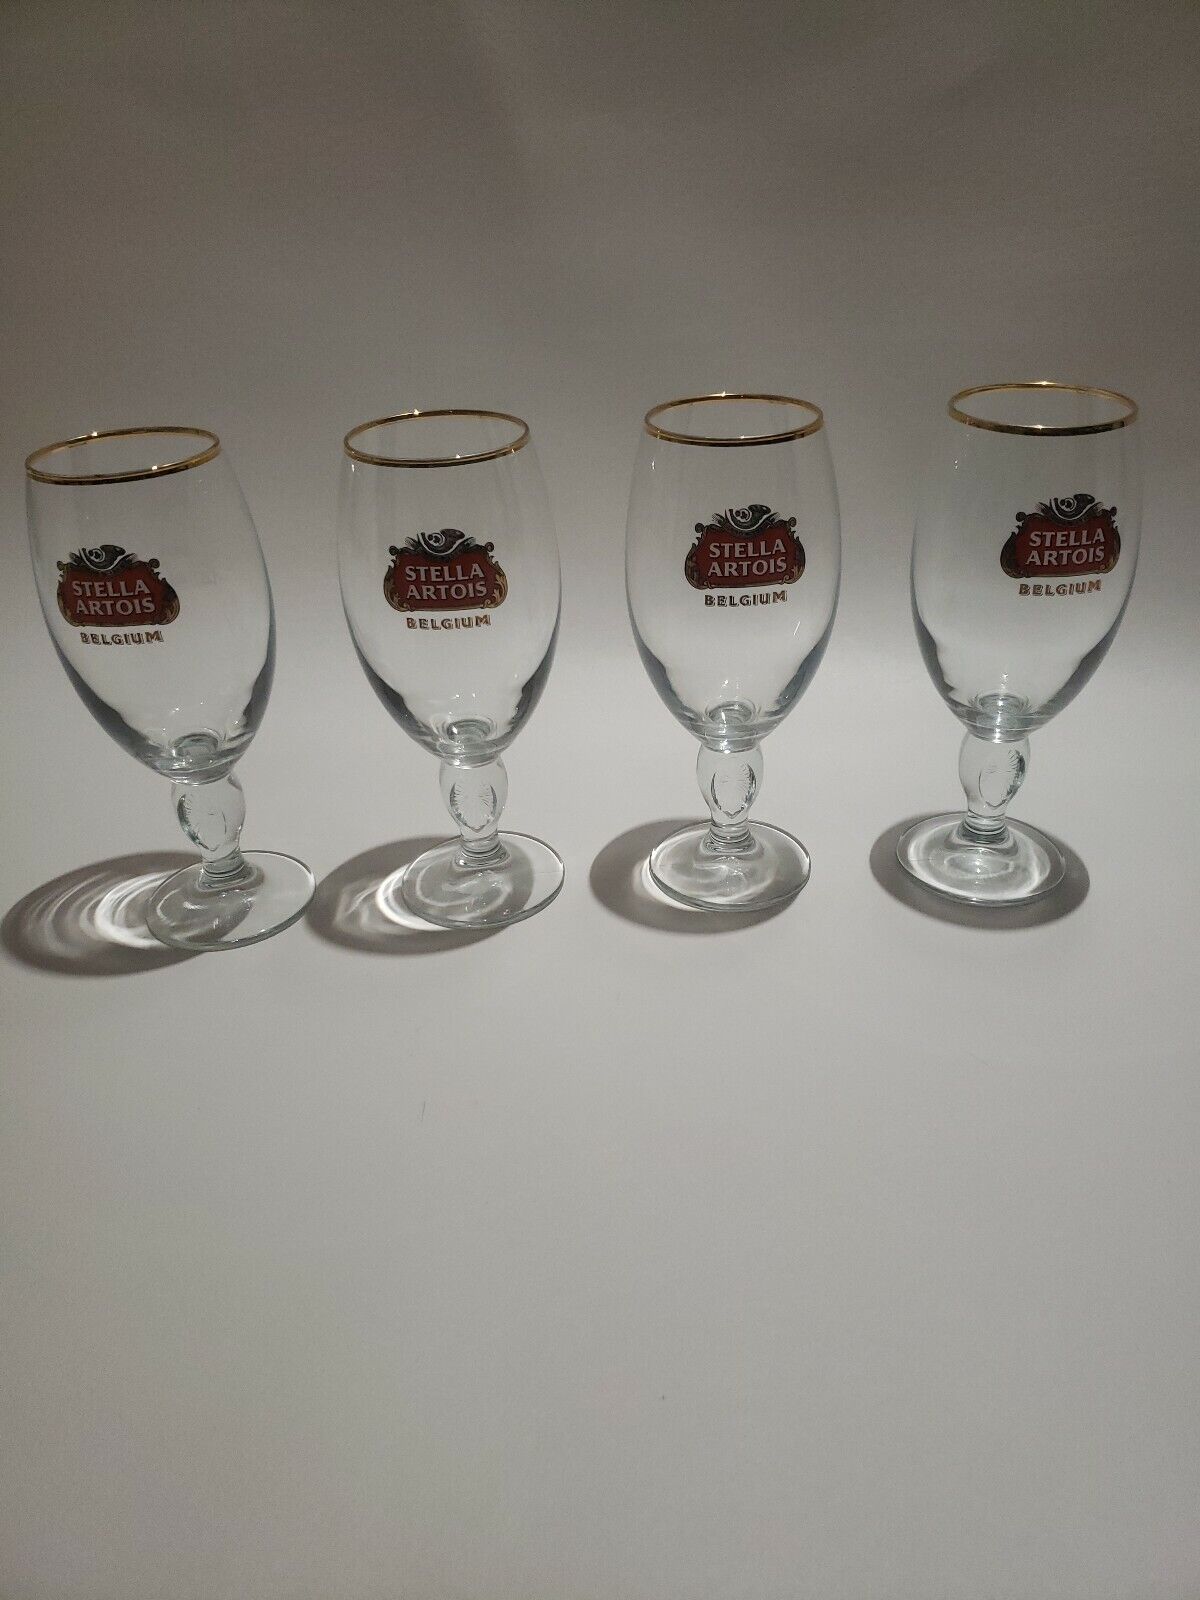 Kentucky Derby 141  Stella Artois Chalice 33CL Beer Glasses  Stella Artois